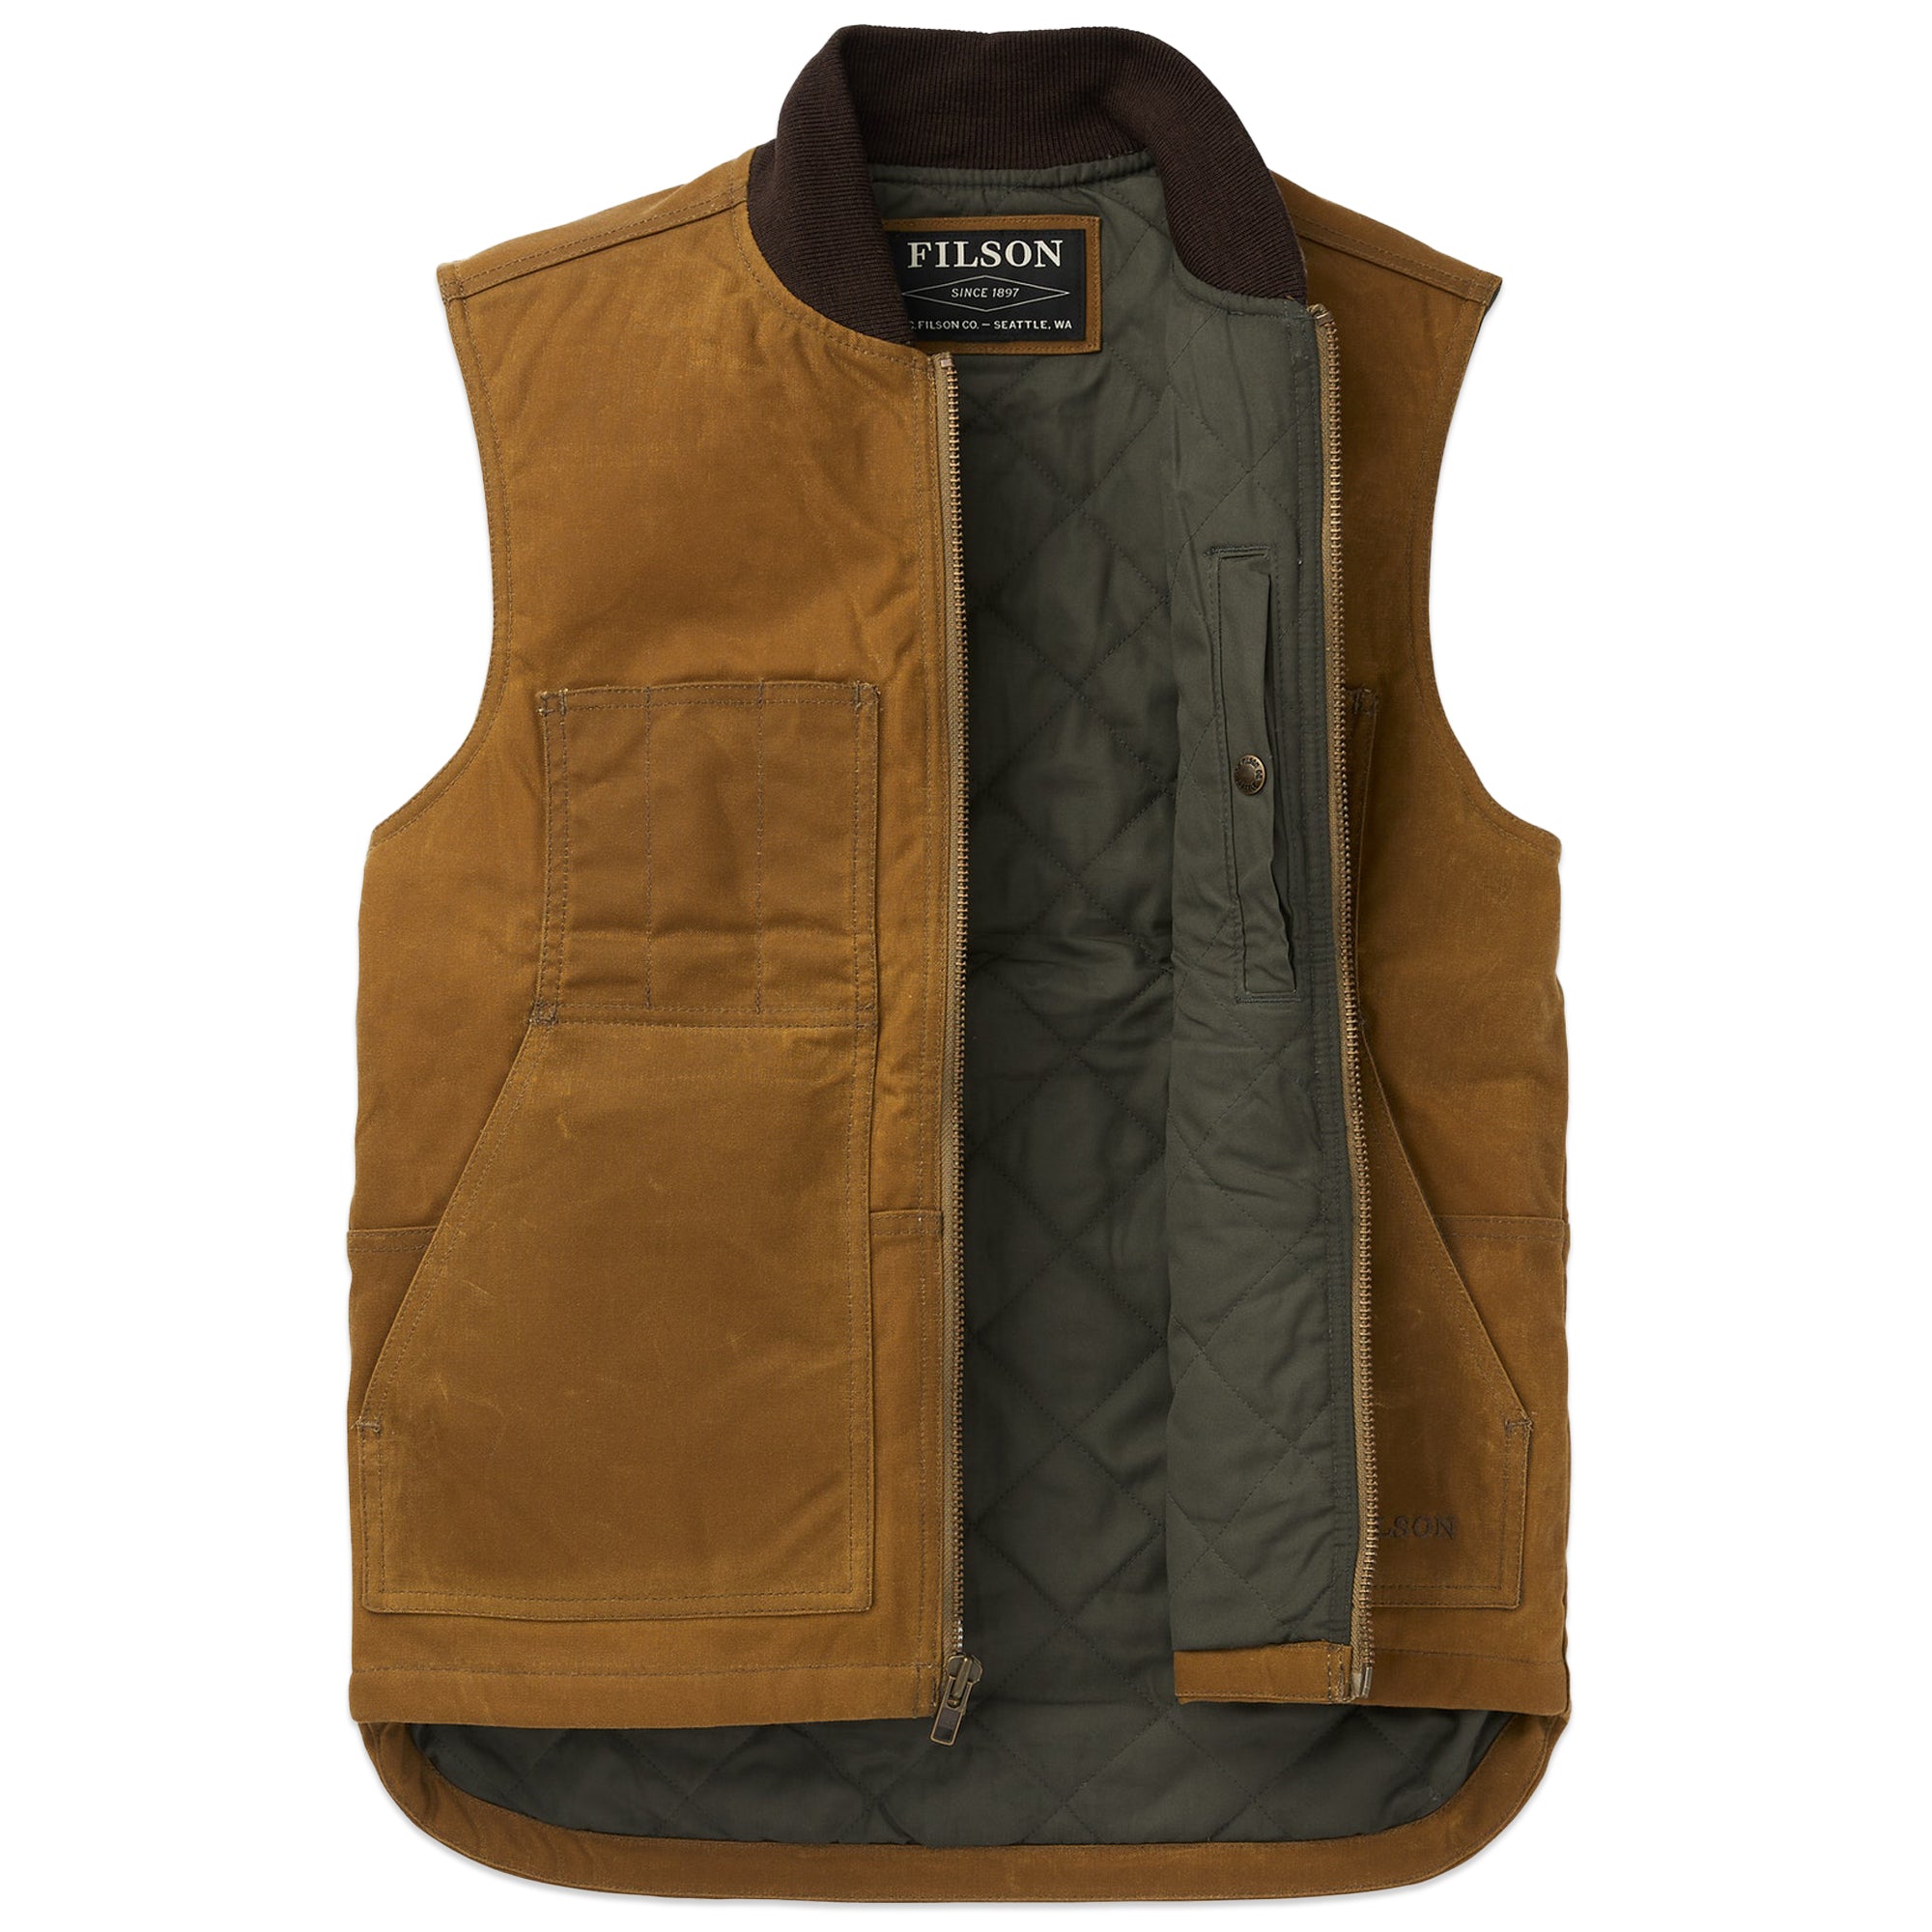 Filson Tin Cloth Insulated Work Vest Gilet - Dark Tan